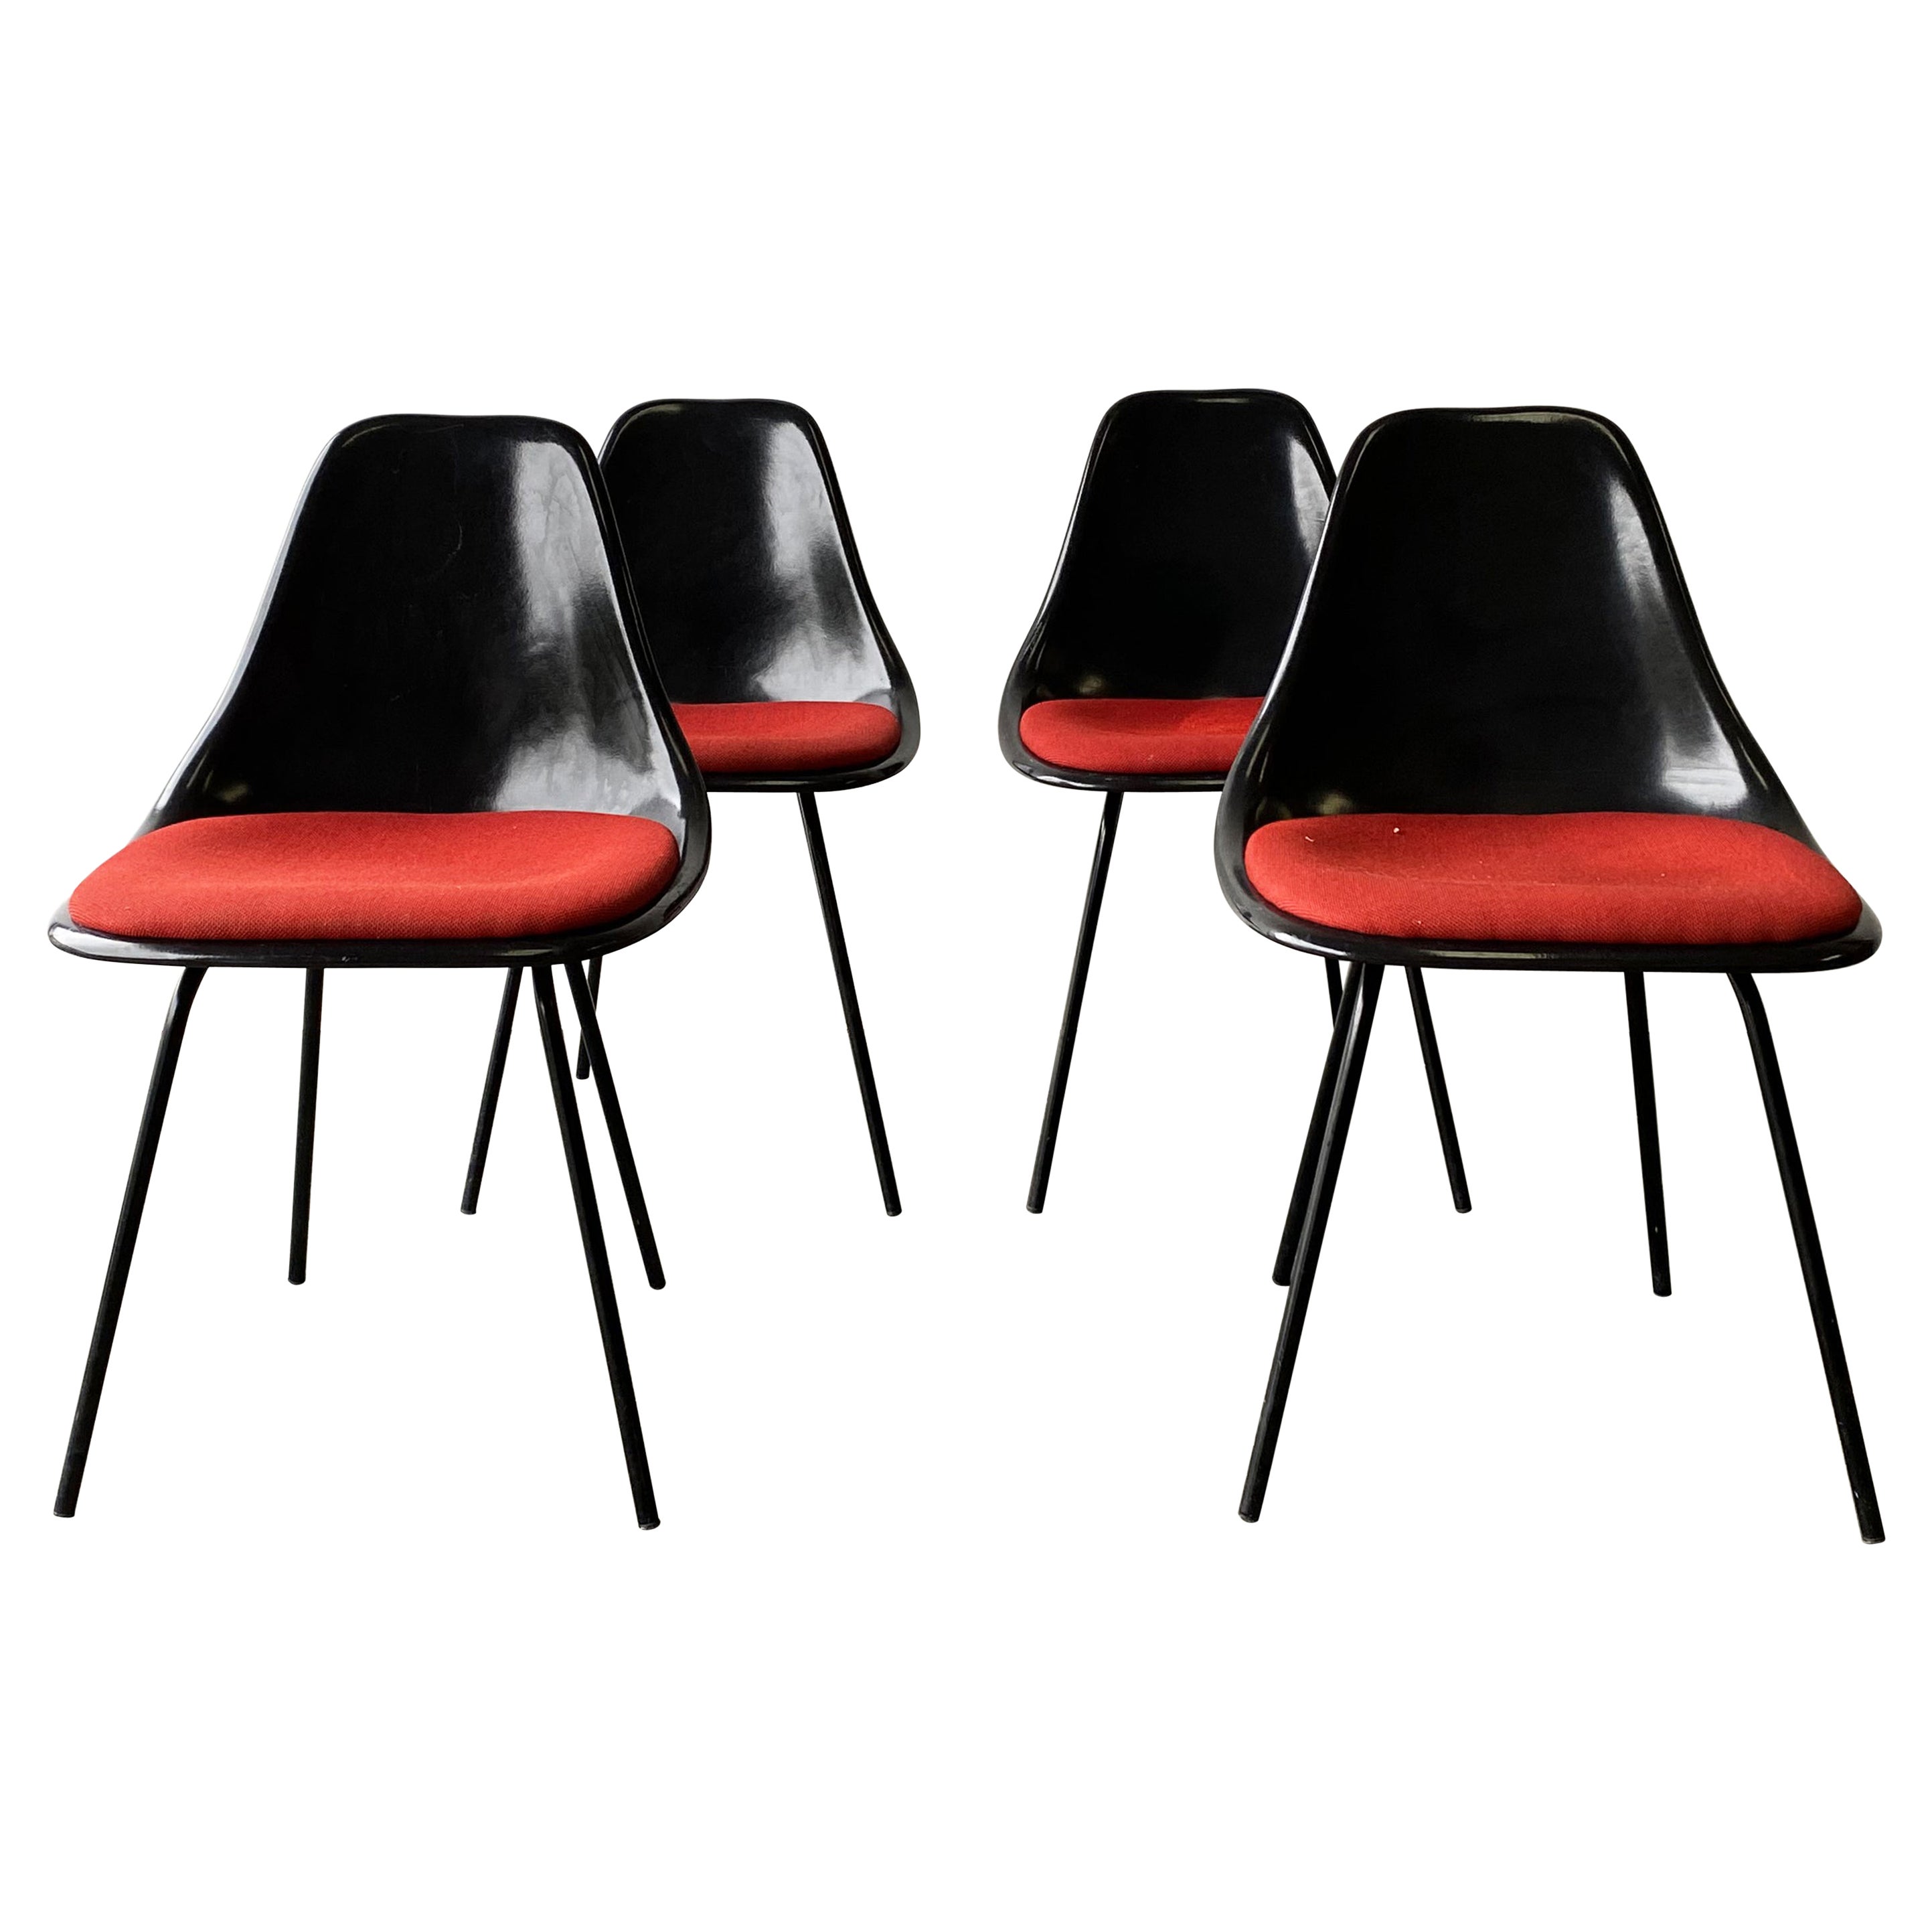 Set 4 mid century 1960’s chairs by Maurice Burke for Arkana after Eero Saarinen